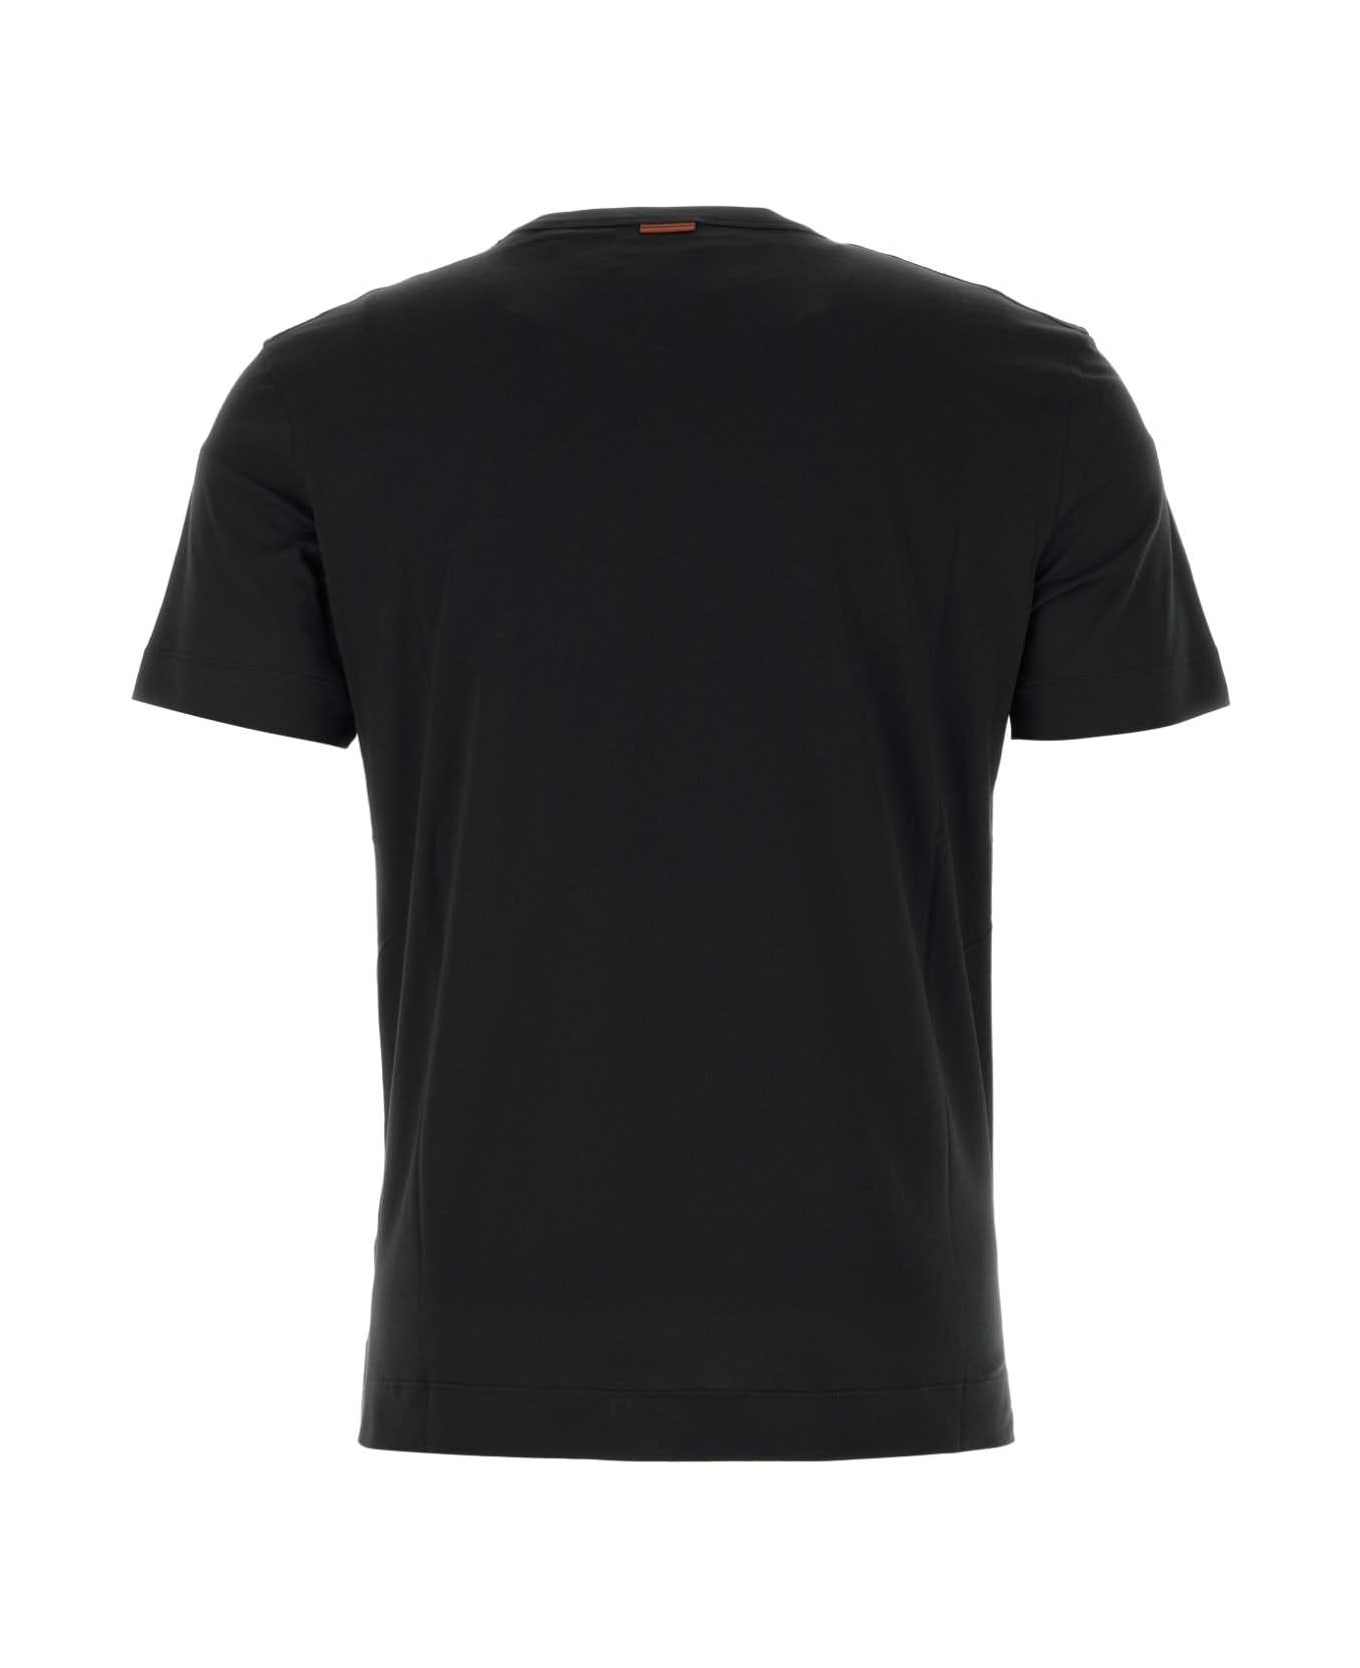 Zegna Black Cotton T-shirt - K09